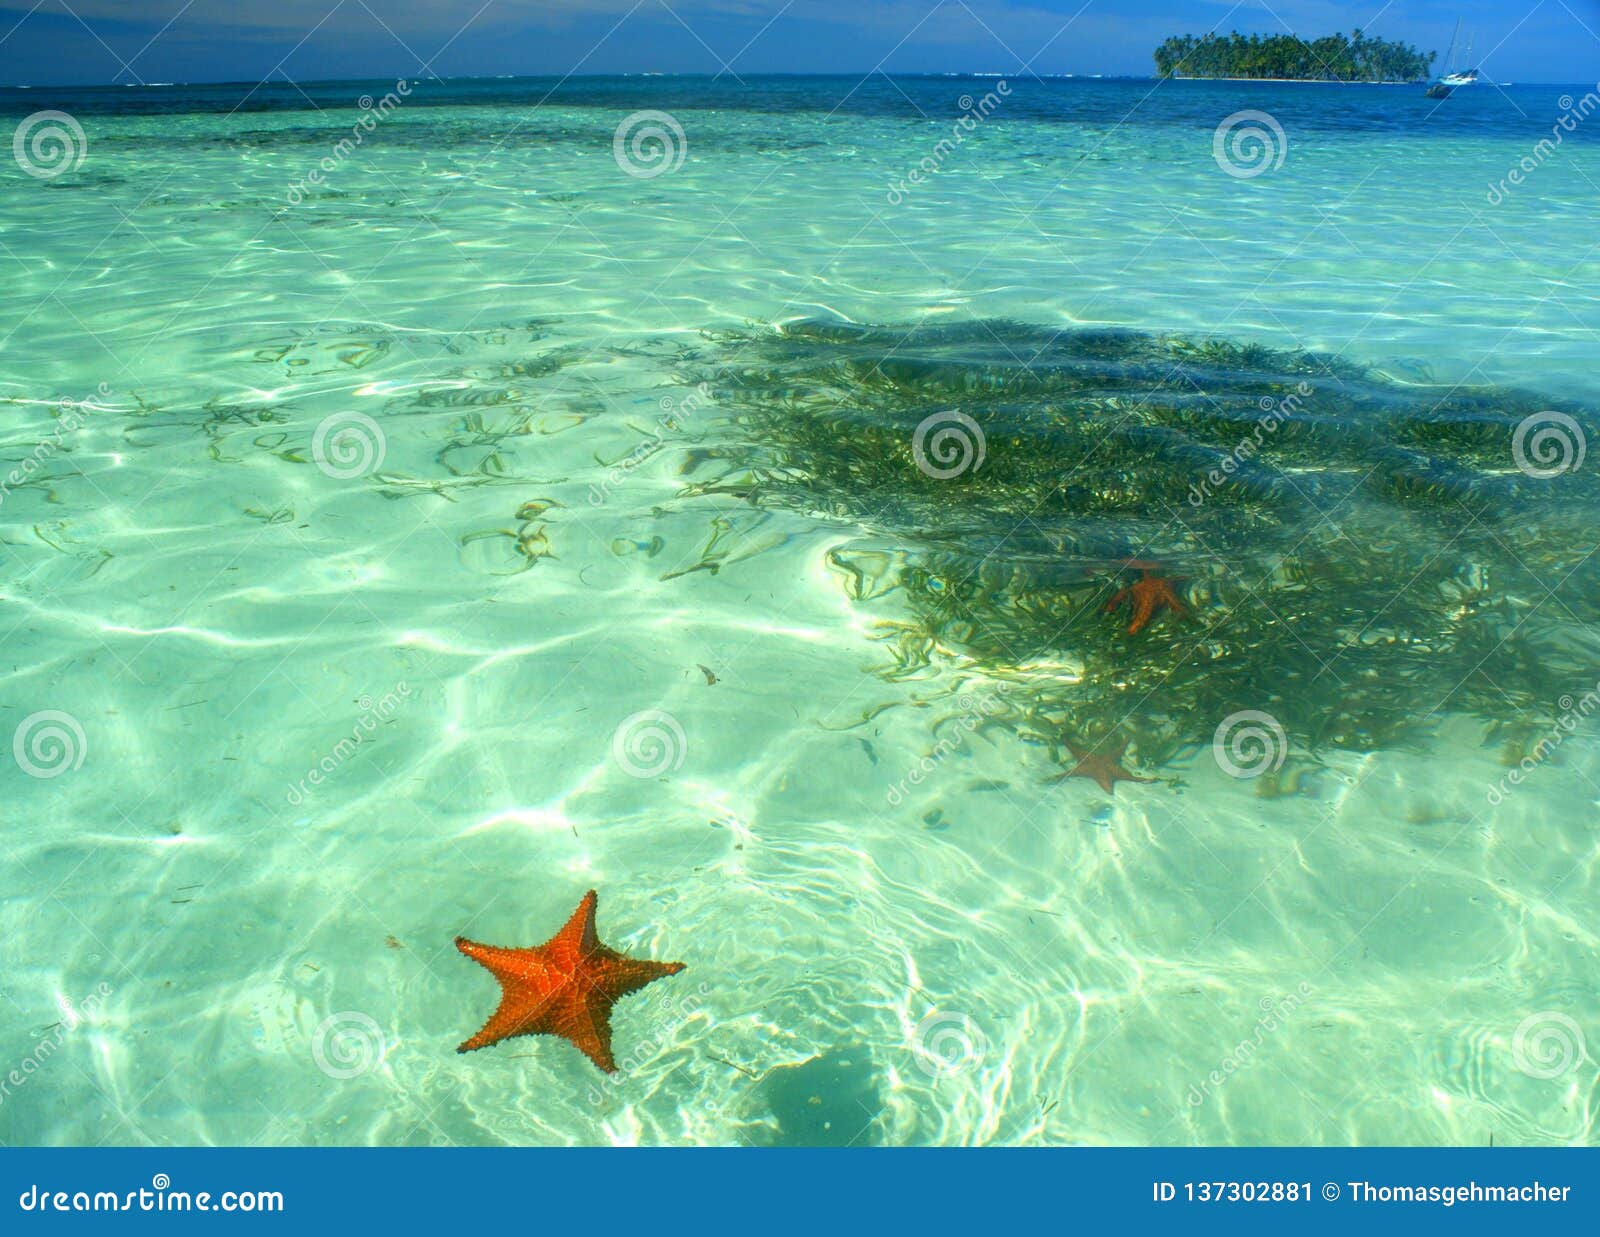 starfish swimming in shallow turquoise waters of san blas archipelato